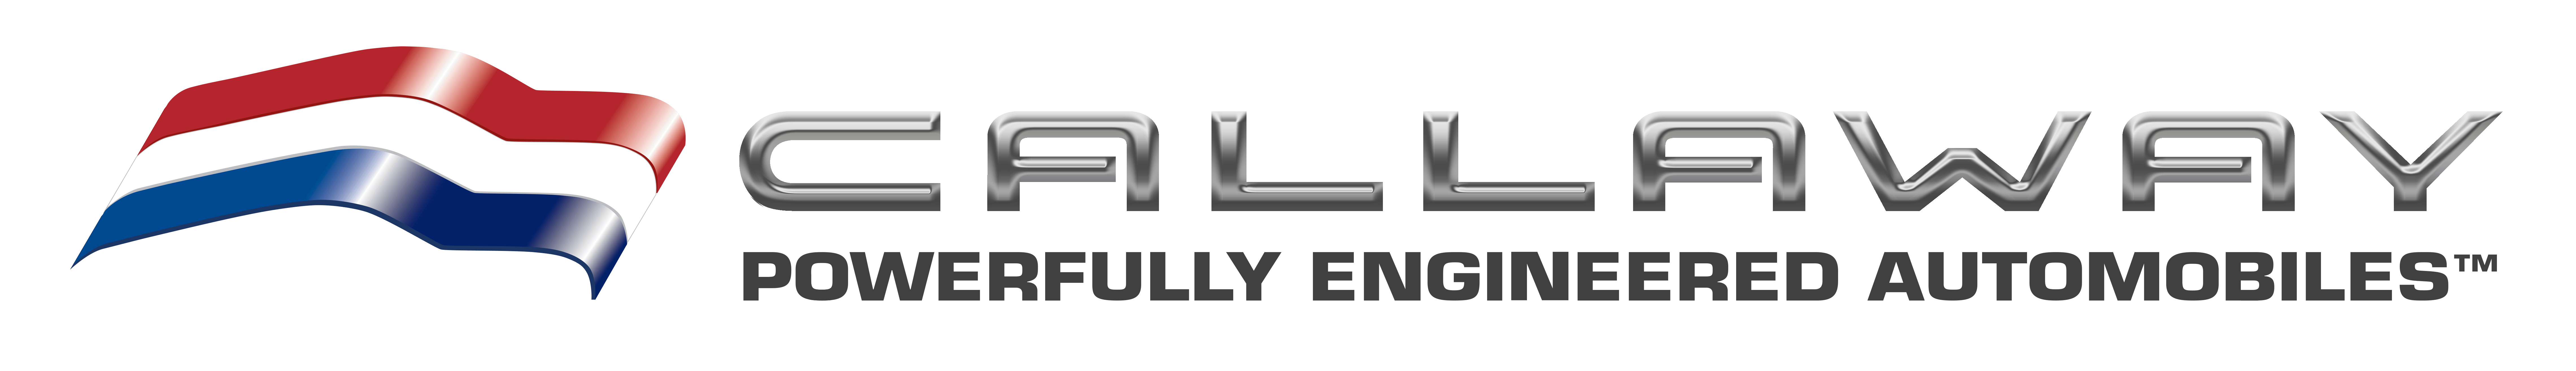 Callaway Logo - HOMEPAGE Callaway Cars produces specialty vehicles, engineering